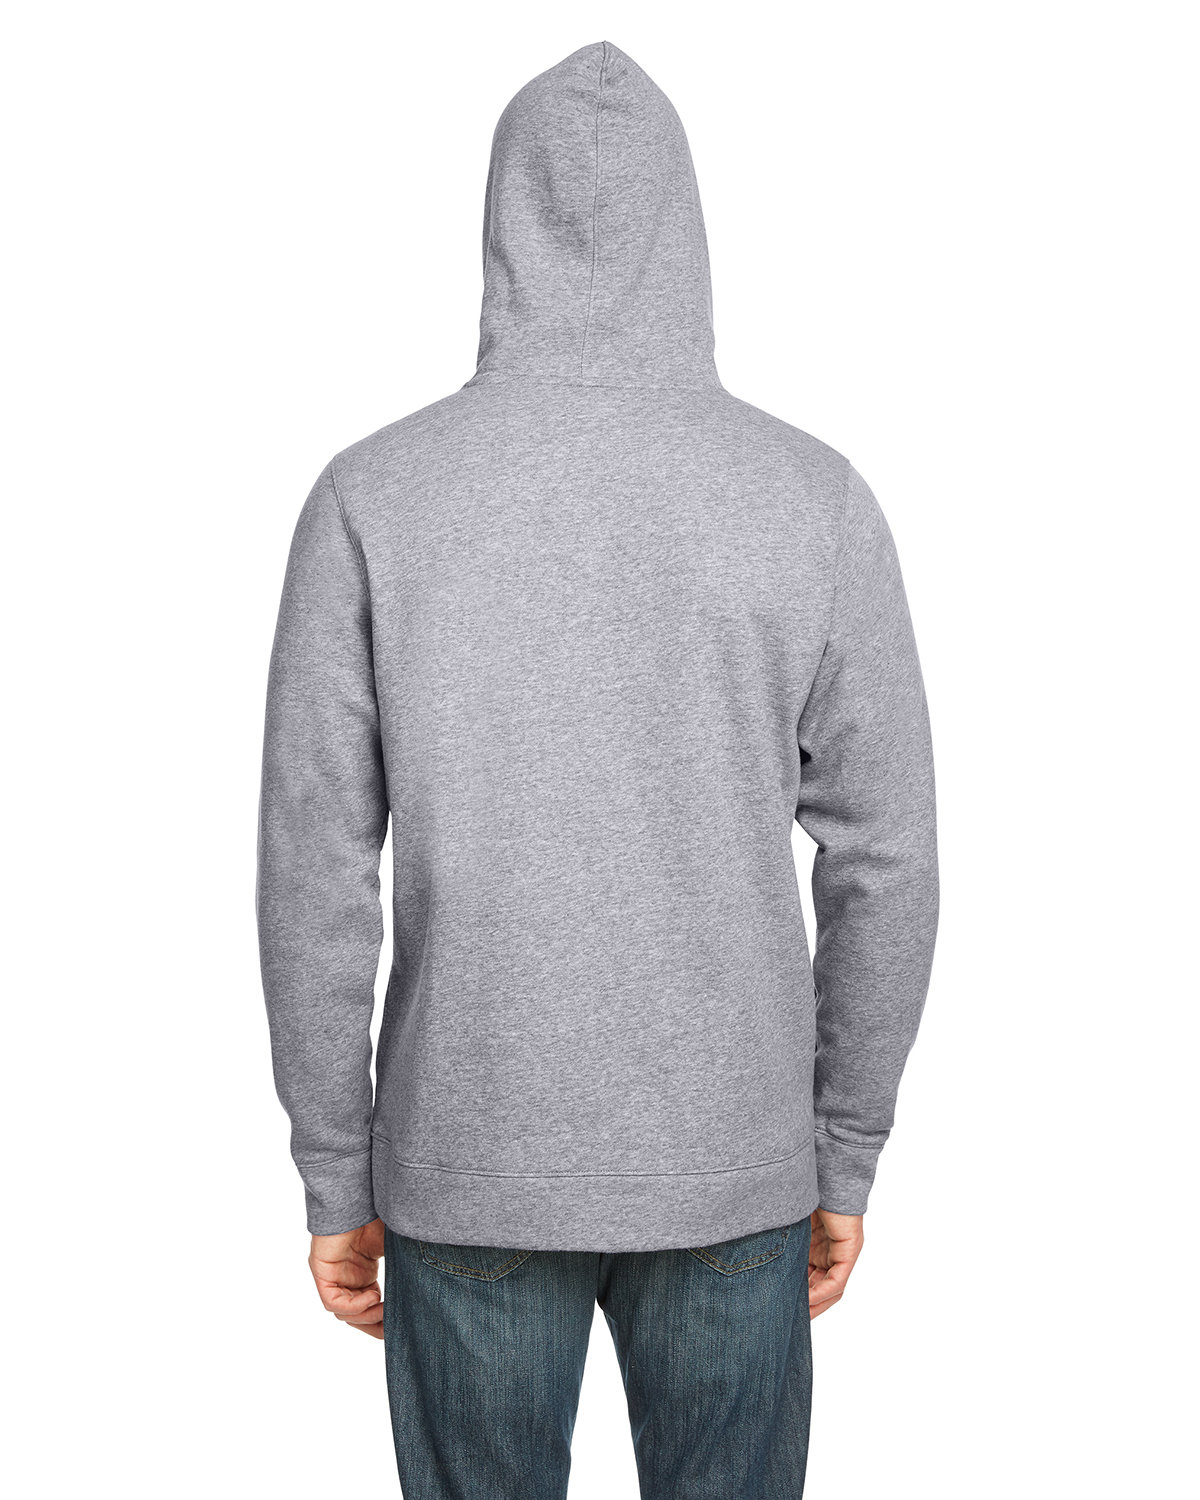 Under Armour Men's Hustle Pullover Hooded Sweatshirt | Generic Site ...